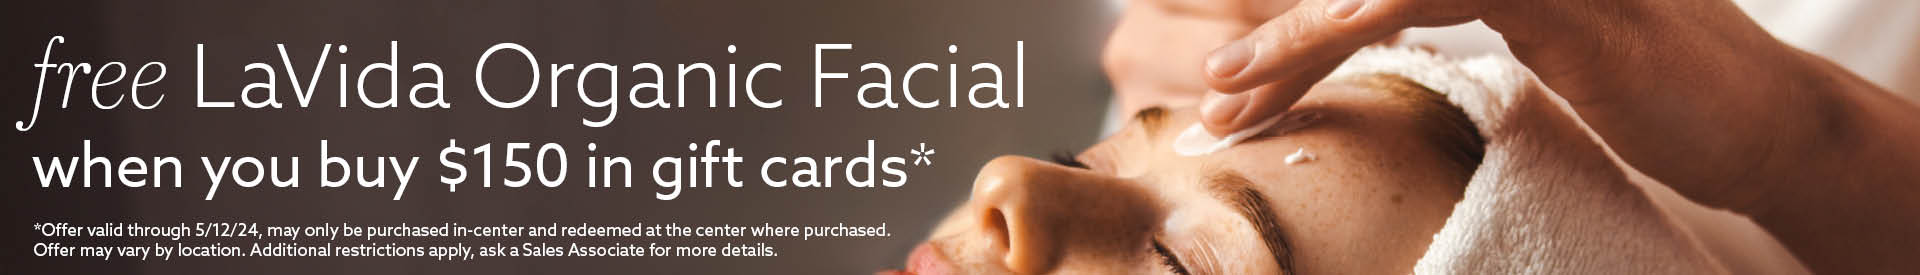 Buy $150 in Gift Cards, Get a free LaVida Organic Facial